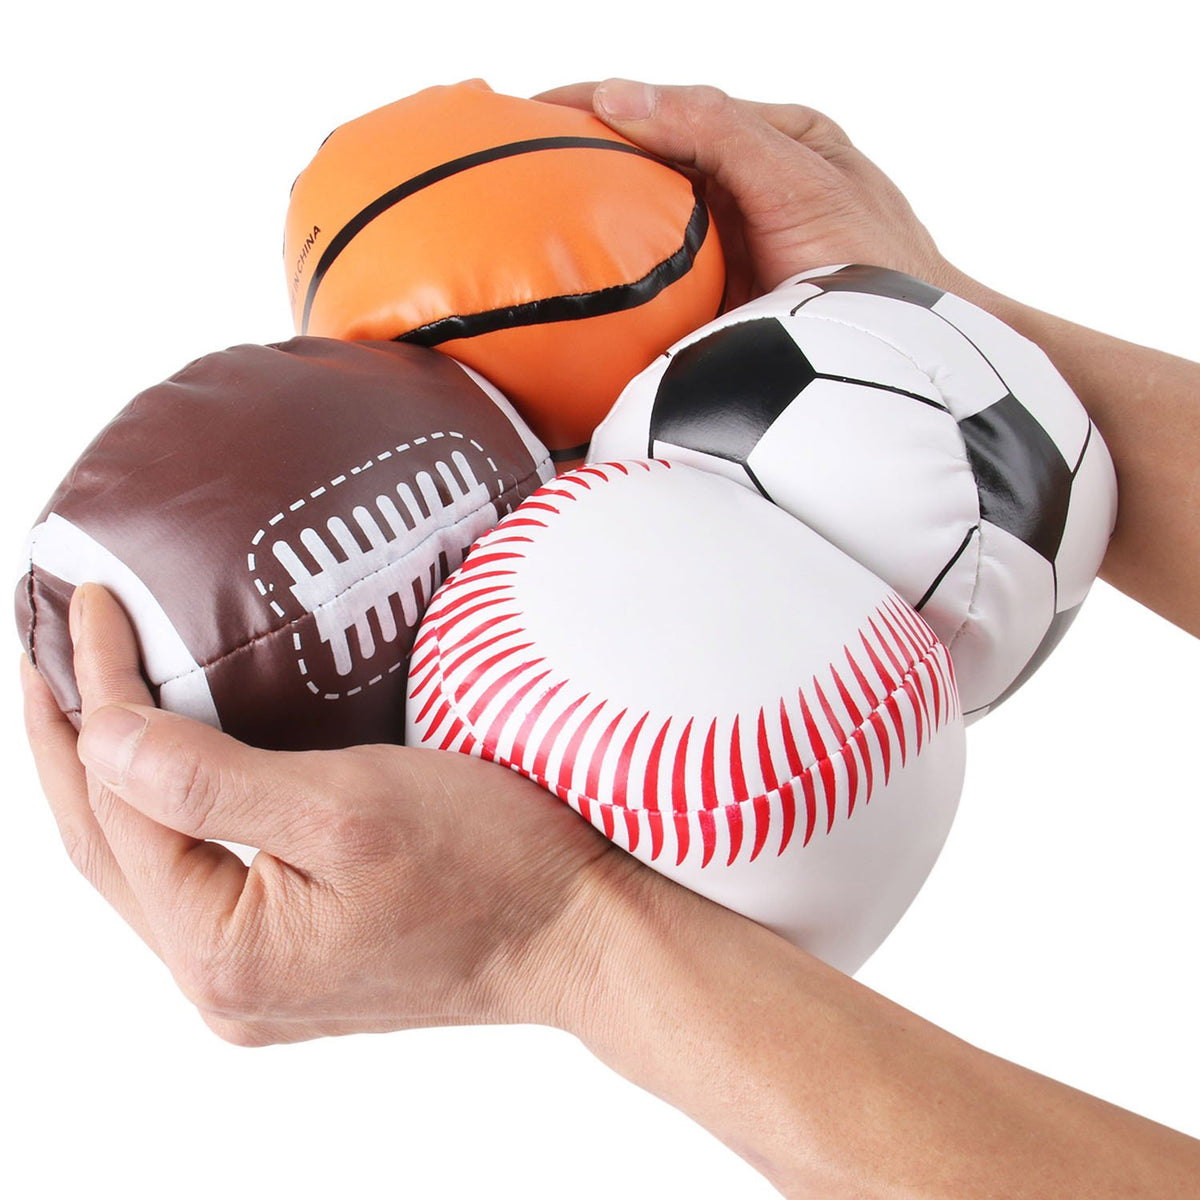 Soft Stuffed Sports Ball For Kids In Bulk- Assorted